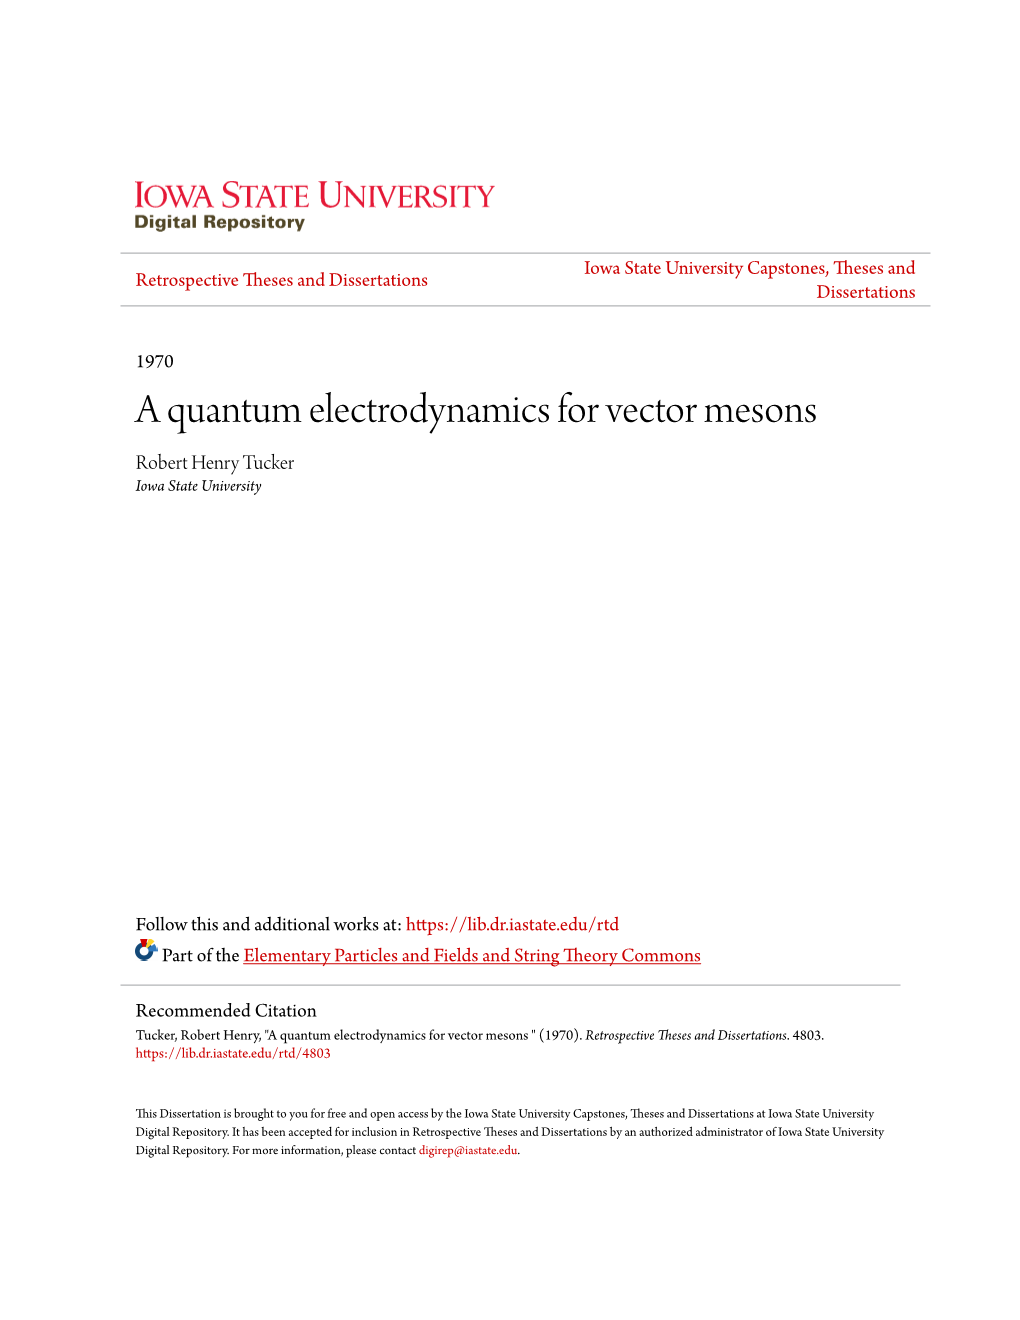 A Quantum Electrodynamics for Vector Mesons Robert Henry Tucker Iowa State University